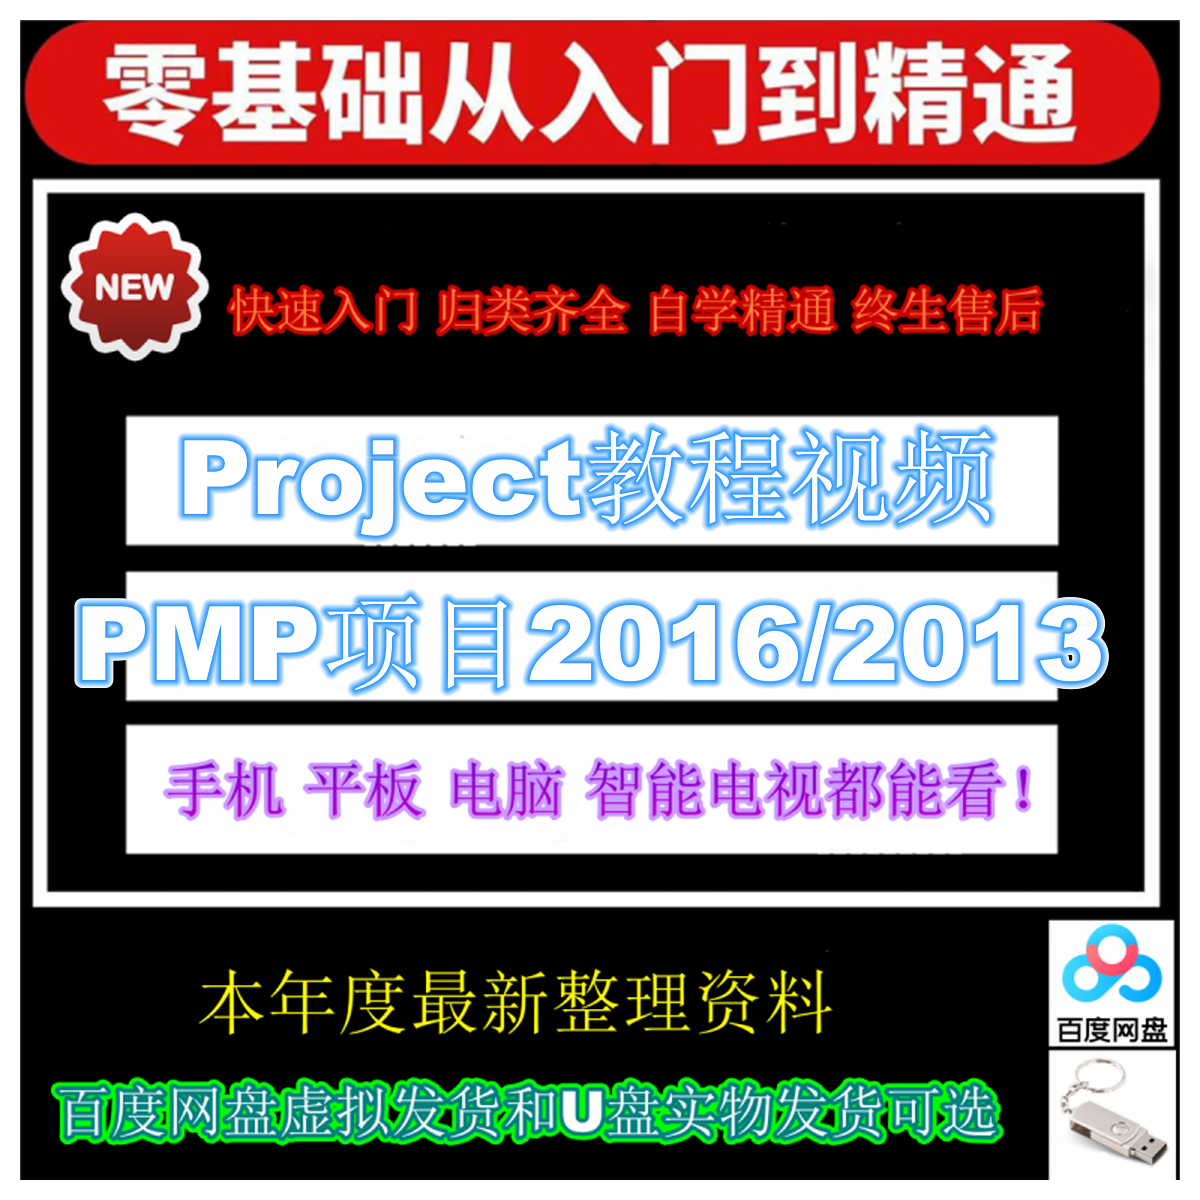 Project教程视频 PMP项目2016/2013办公流程管理工程甘特图教学 百度网盘发货【虚拟发货】